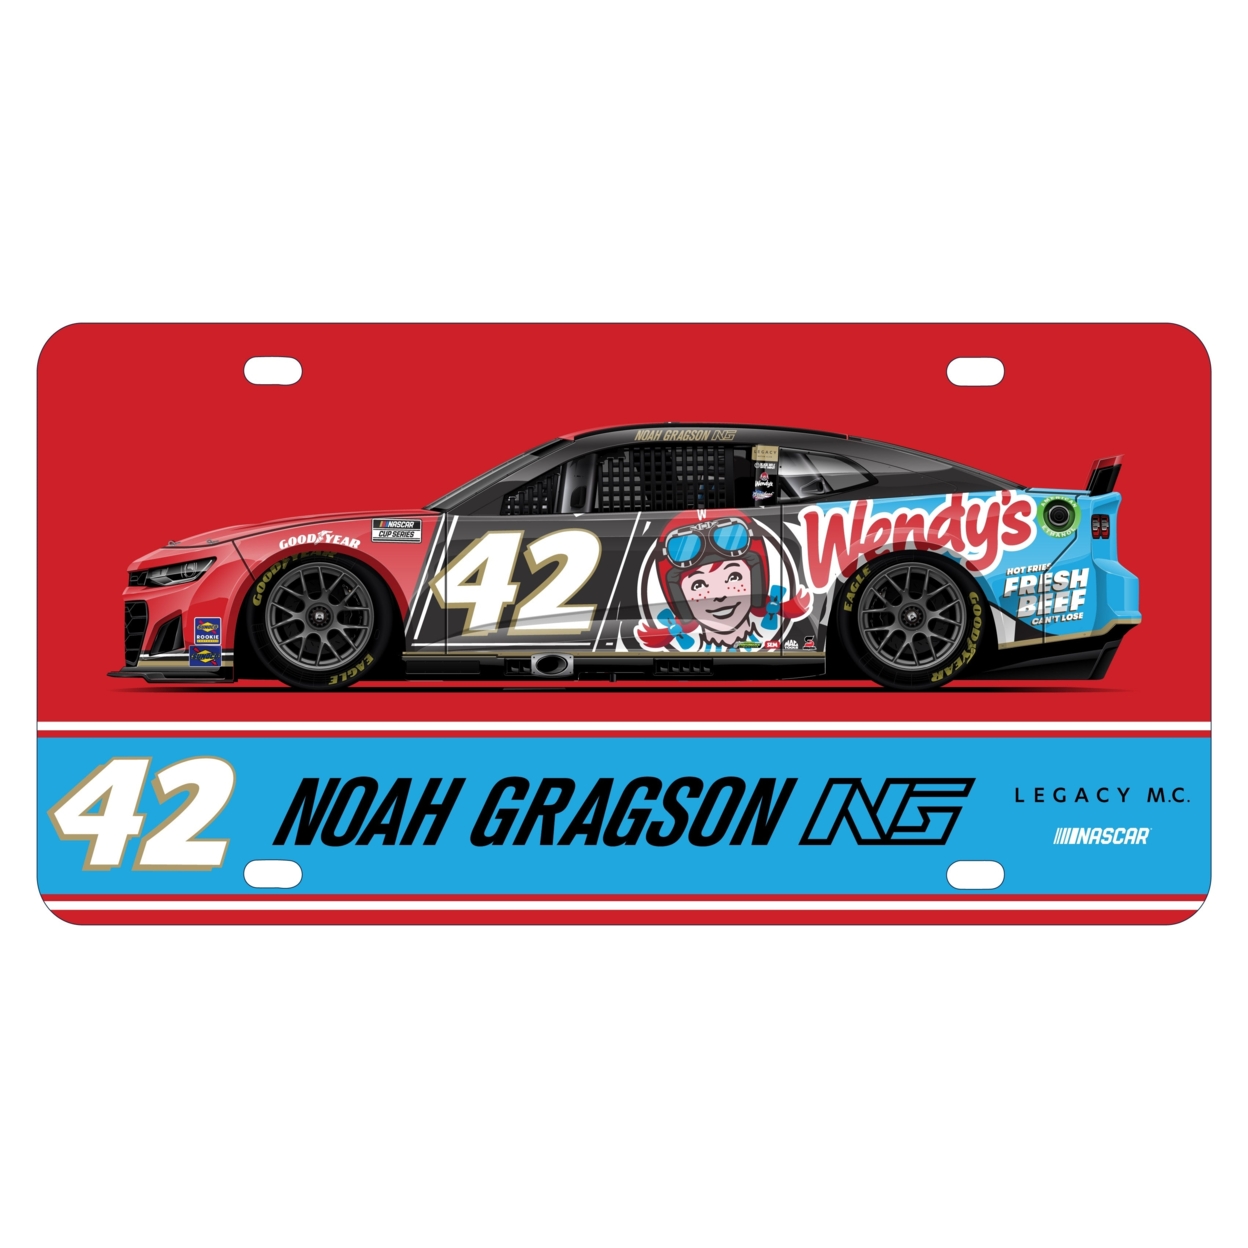 #42 Noah Gragson W Officially Licensed NASCAR Metal License Plate